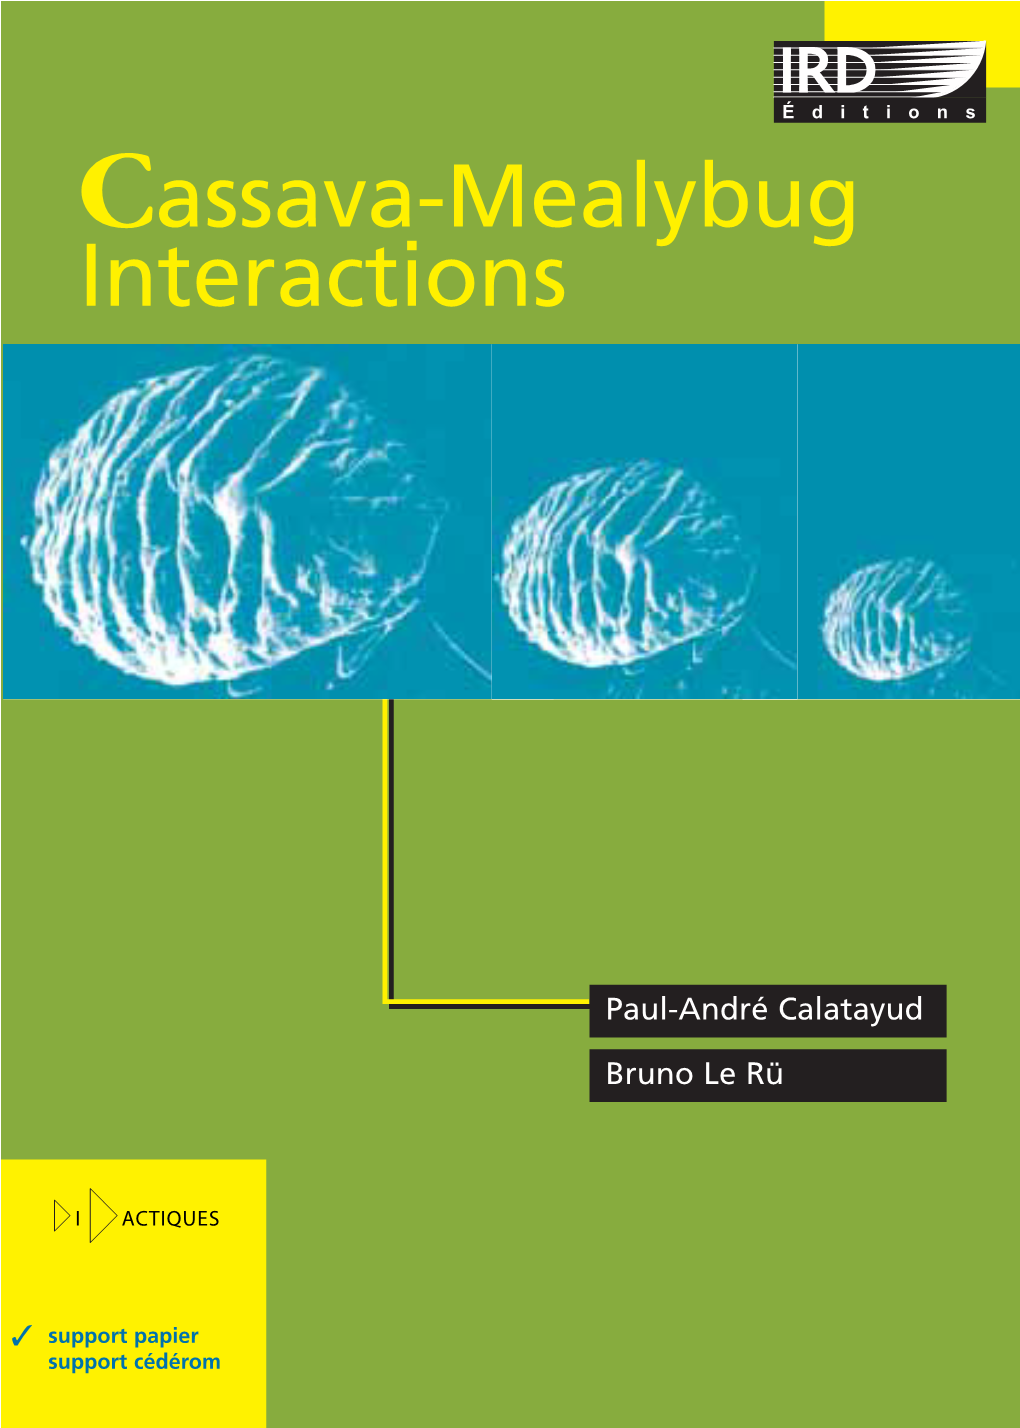 Cassava-Mealybug Interactions